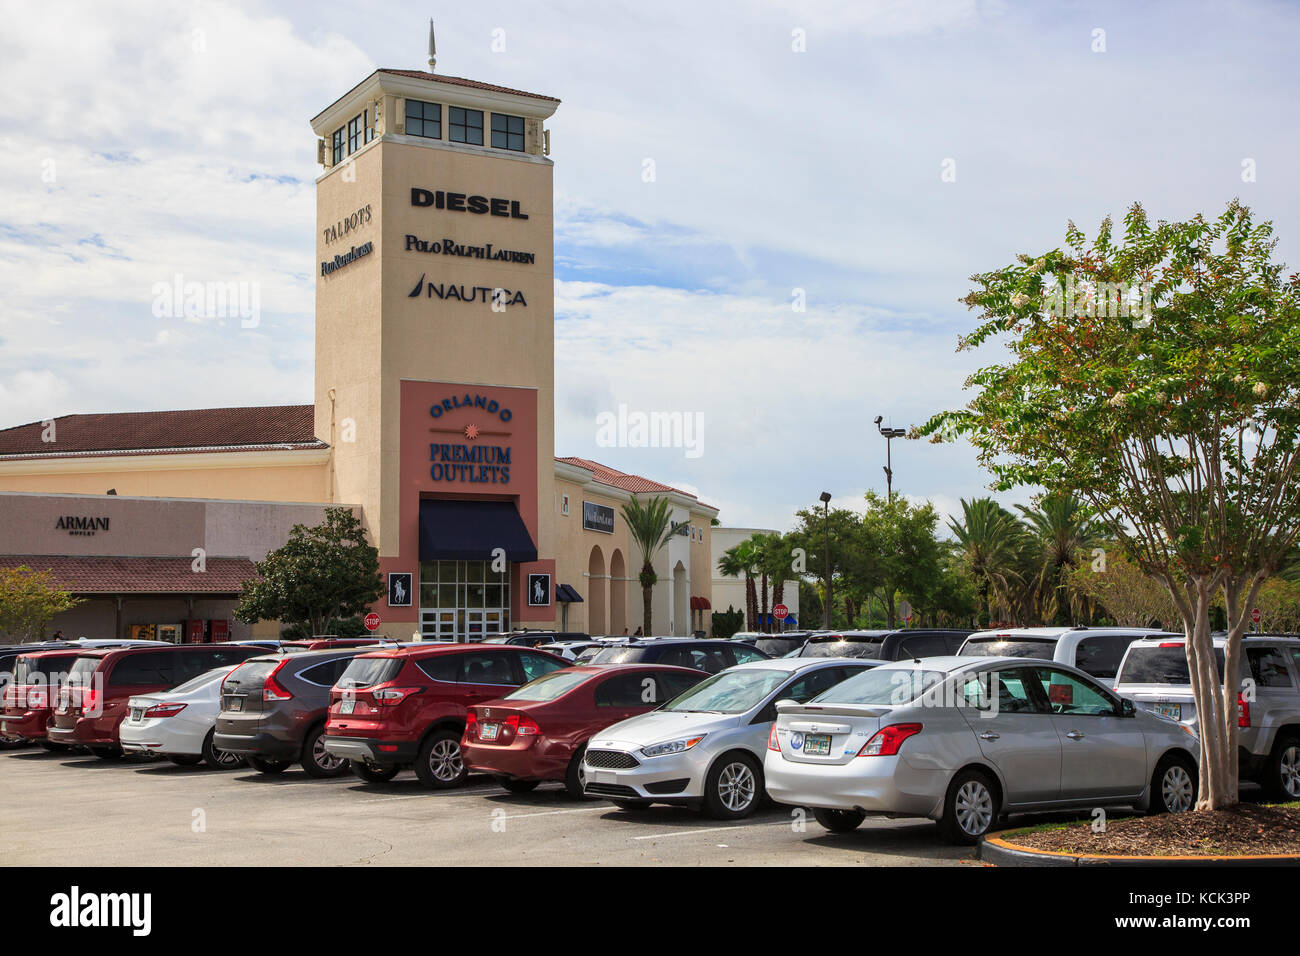 Premium Outlets, Centre Commercial International Drive, Orlando, Florida, USA Banque D'Images